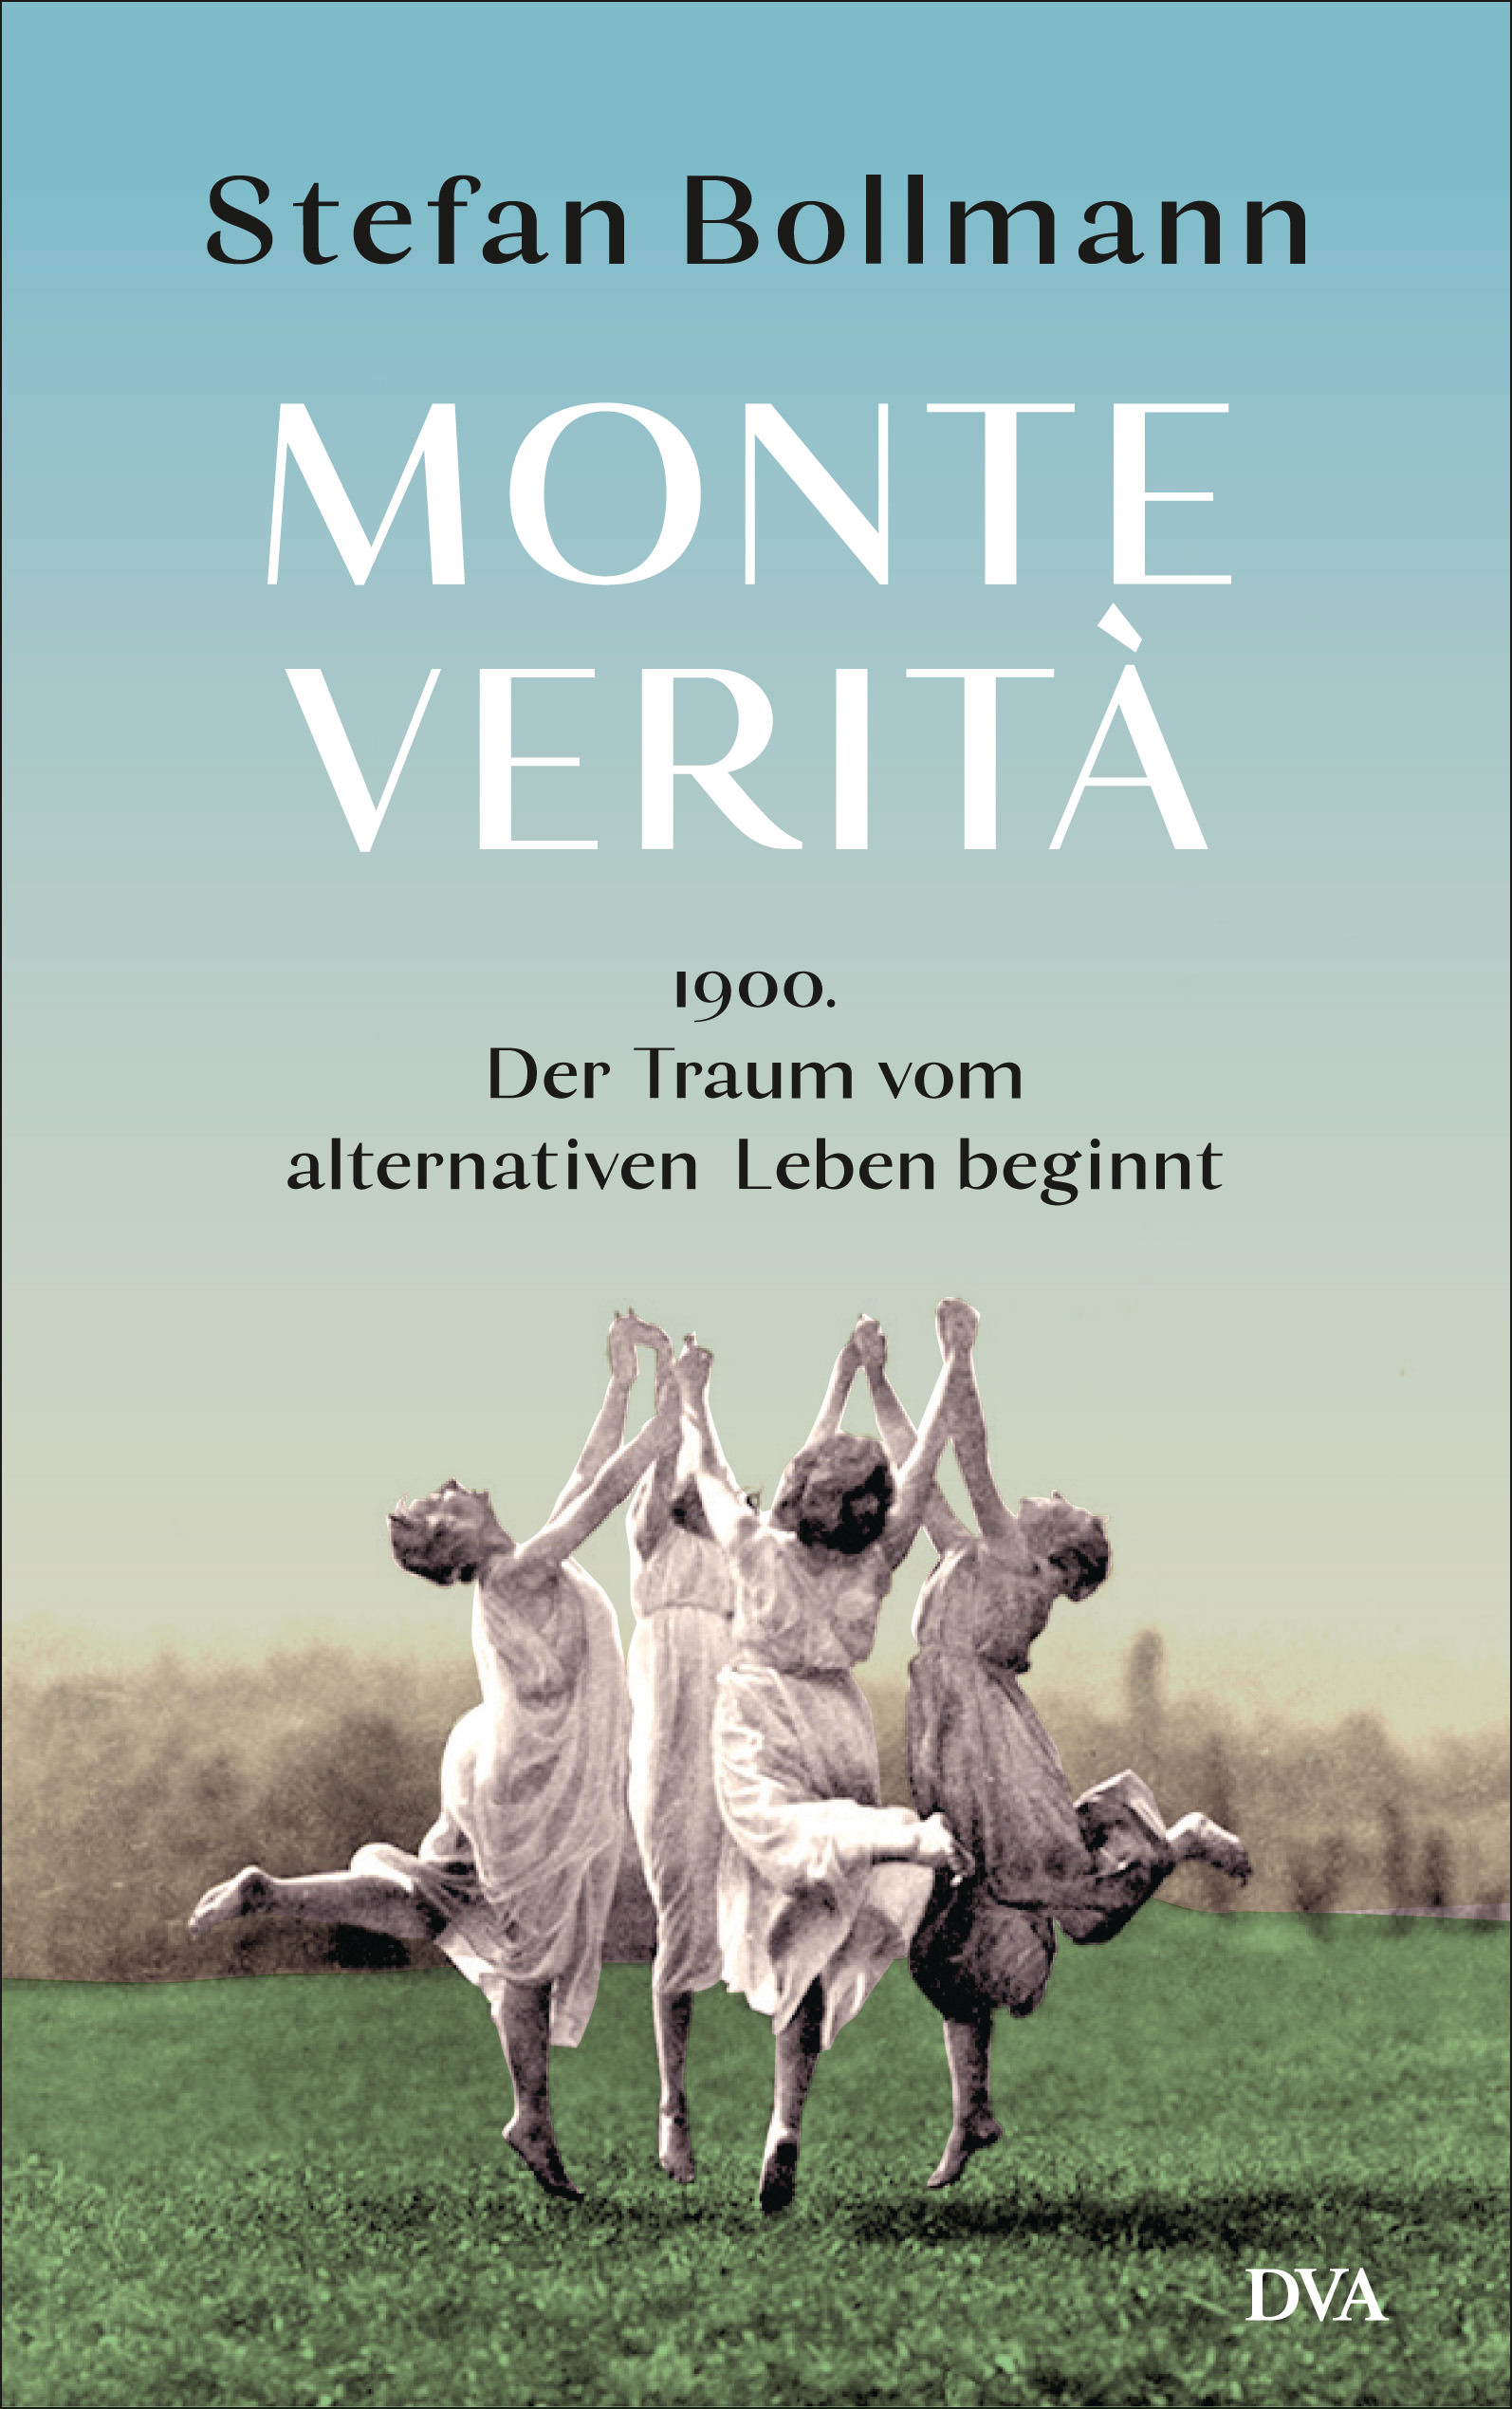 Buchcover: Stefan Bollmann Monte Verità. DVA